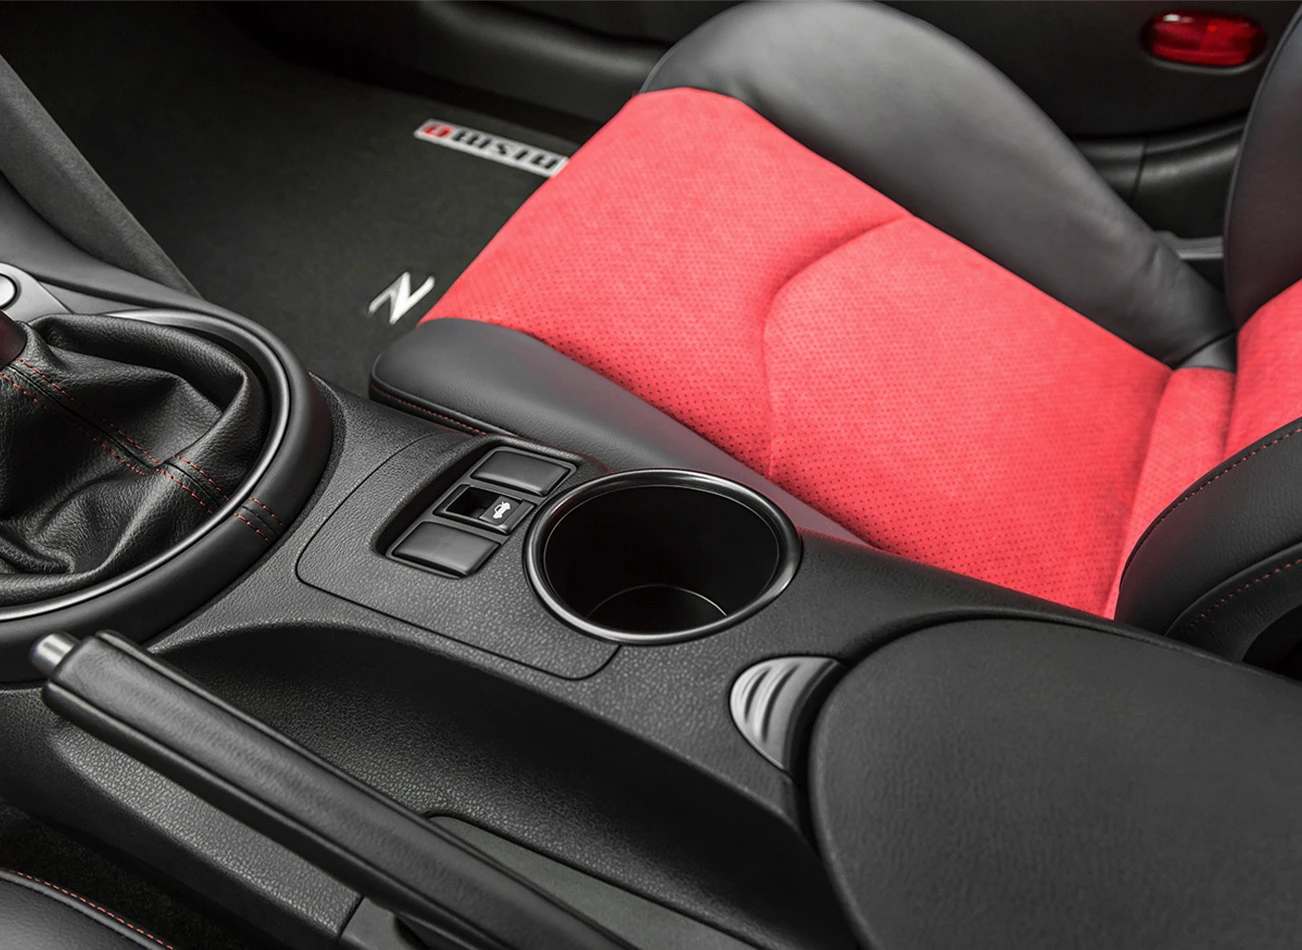  2020 Nissan 370Z: Front console| CarMax